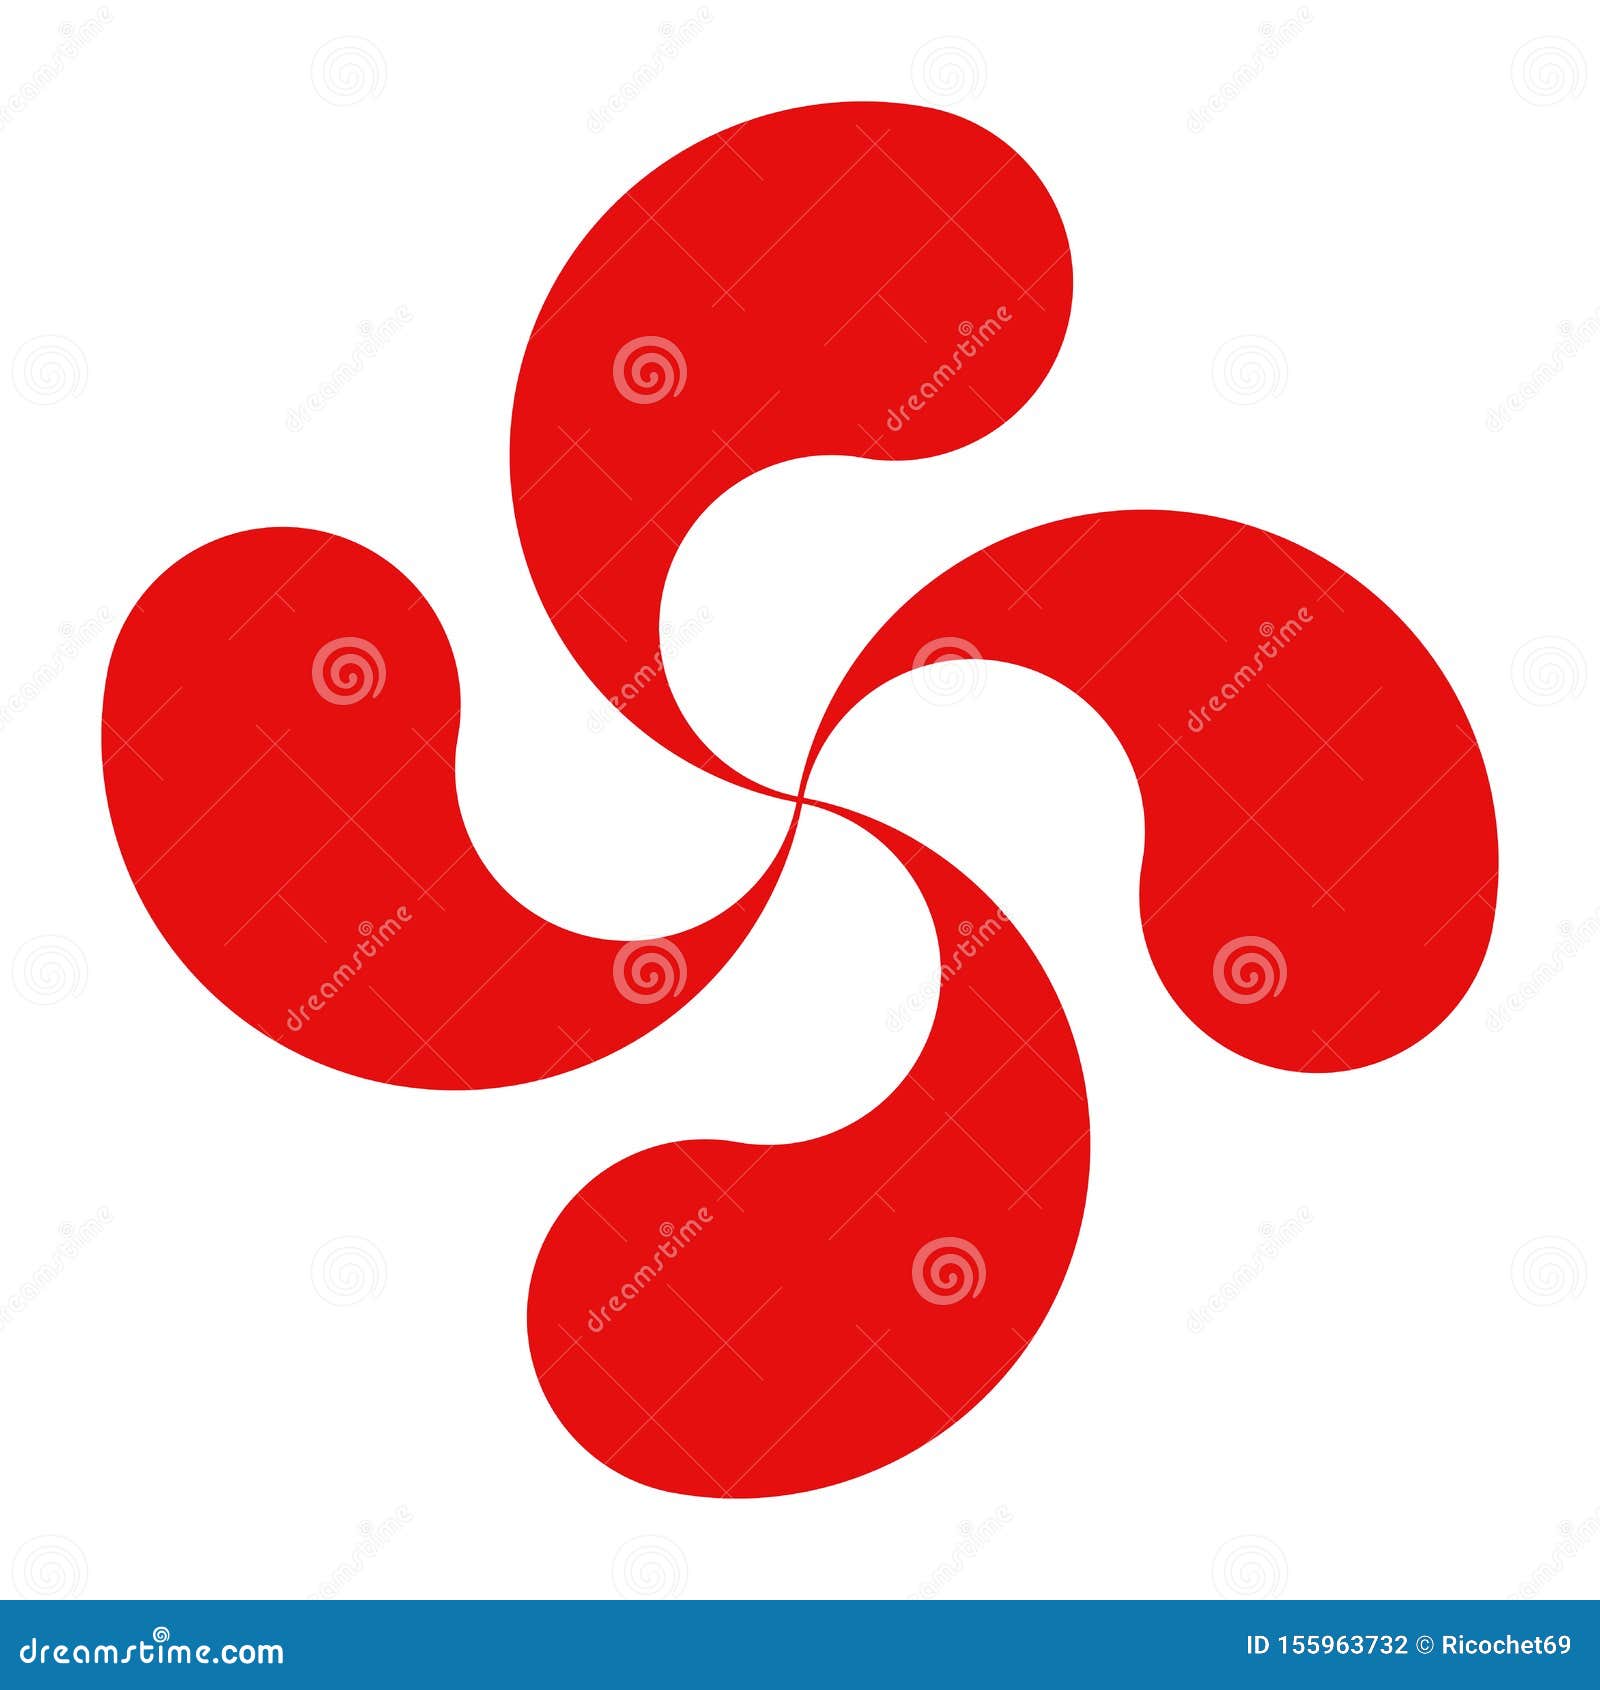 lauburu or red basque cross 